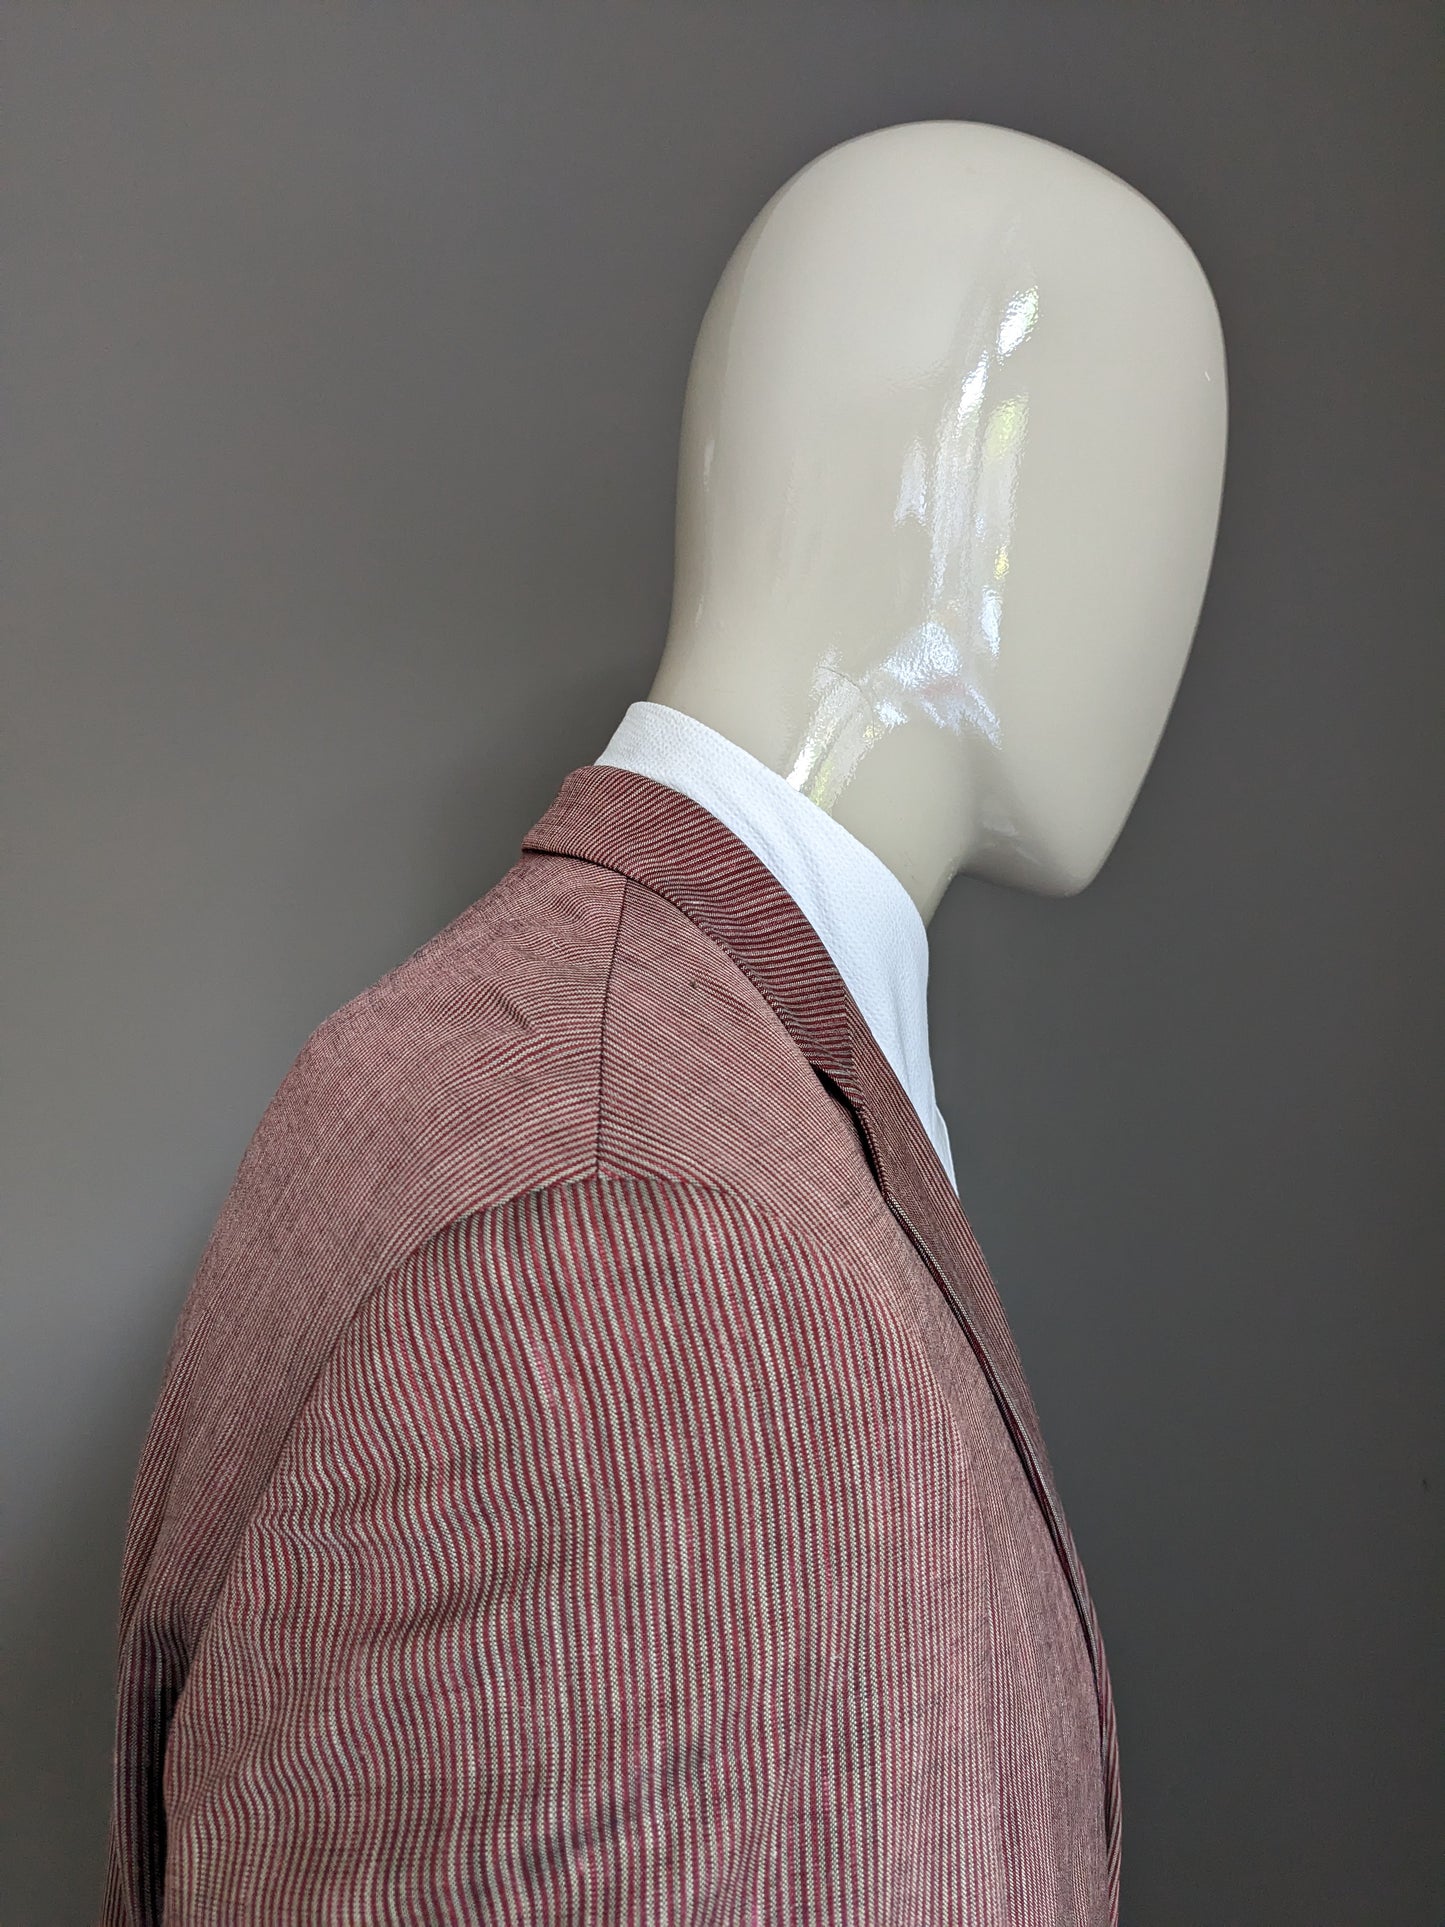 Bogart wool linen silk jacket. Gray red striped. Size 52 / L.